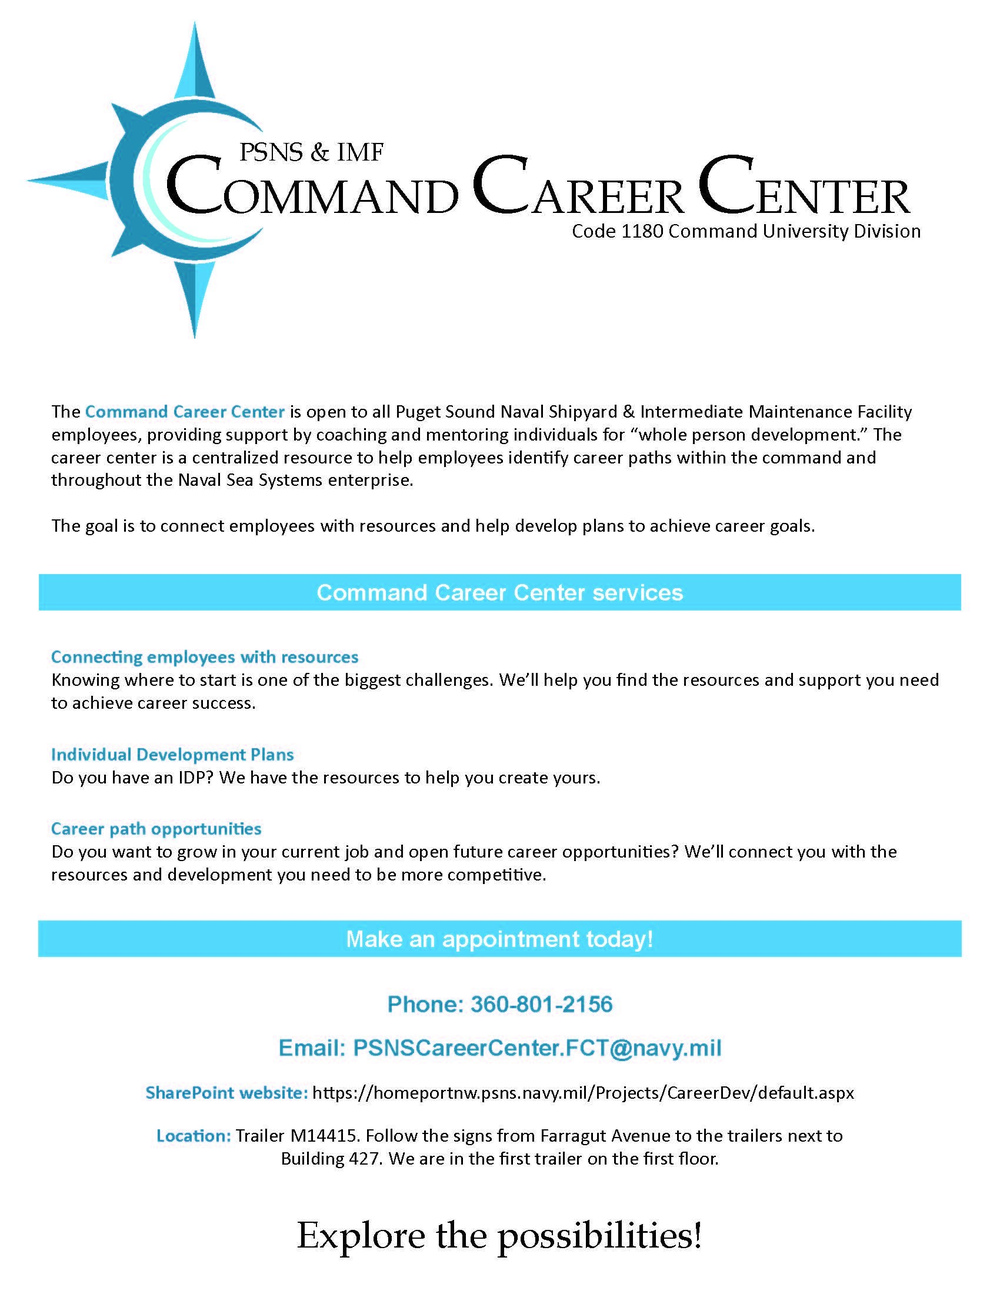 Command Career Center